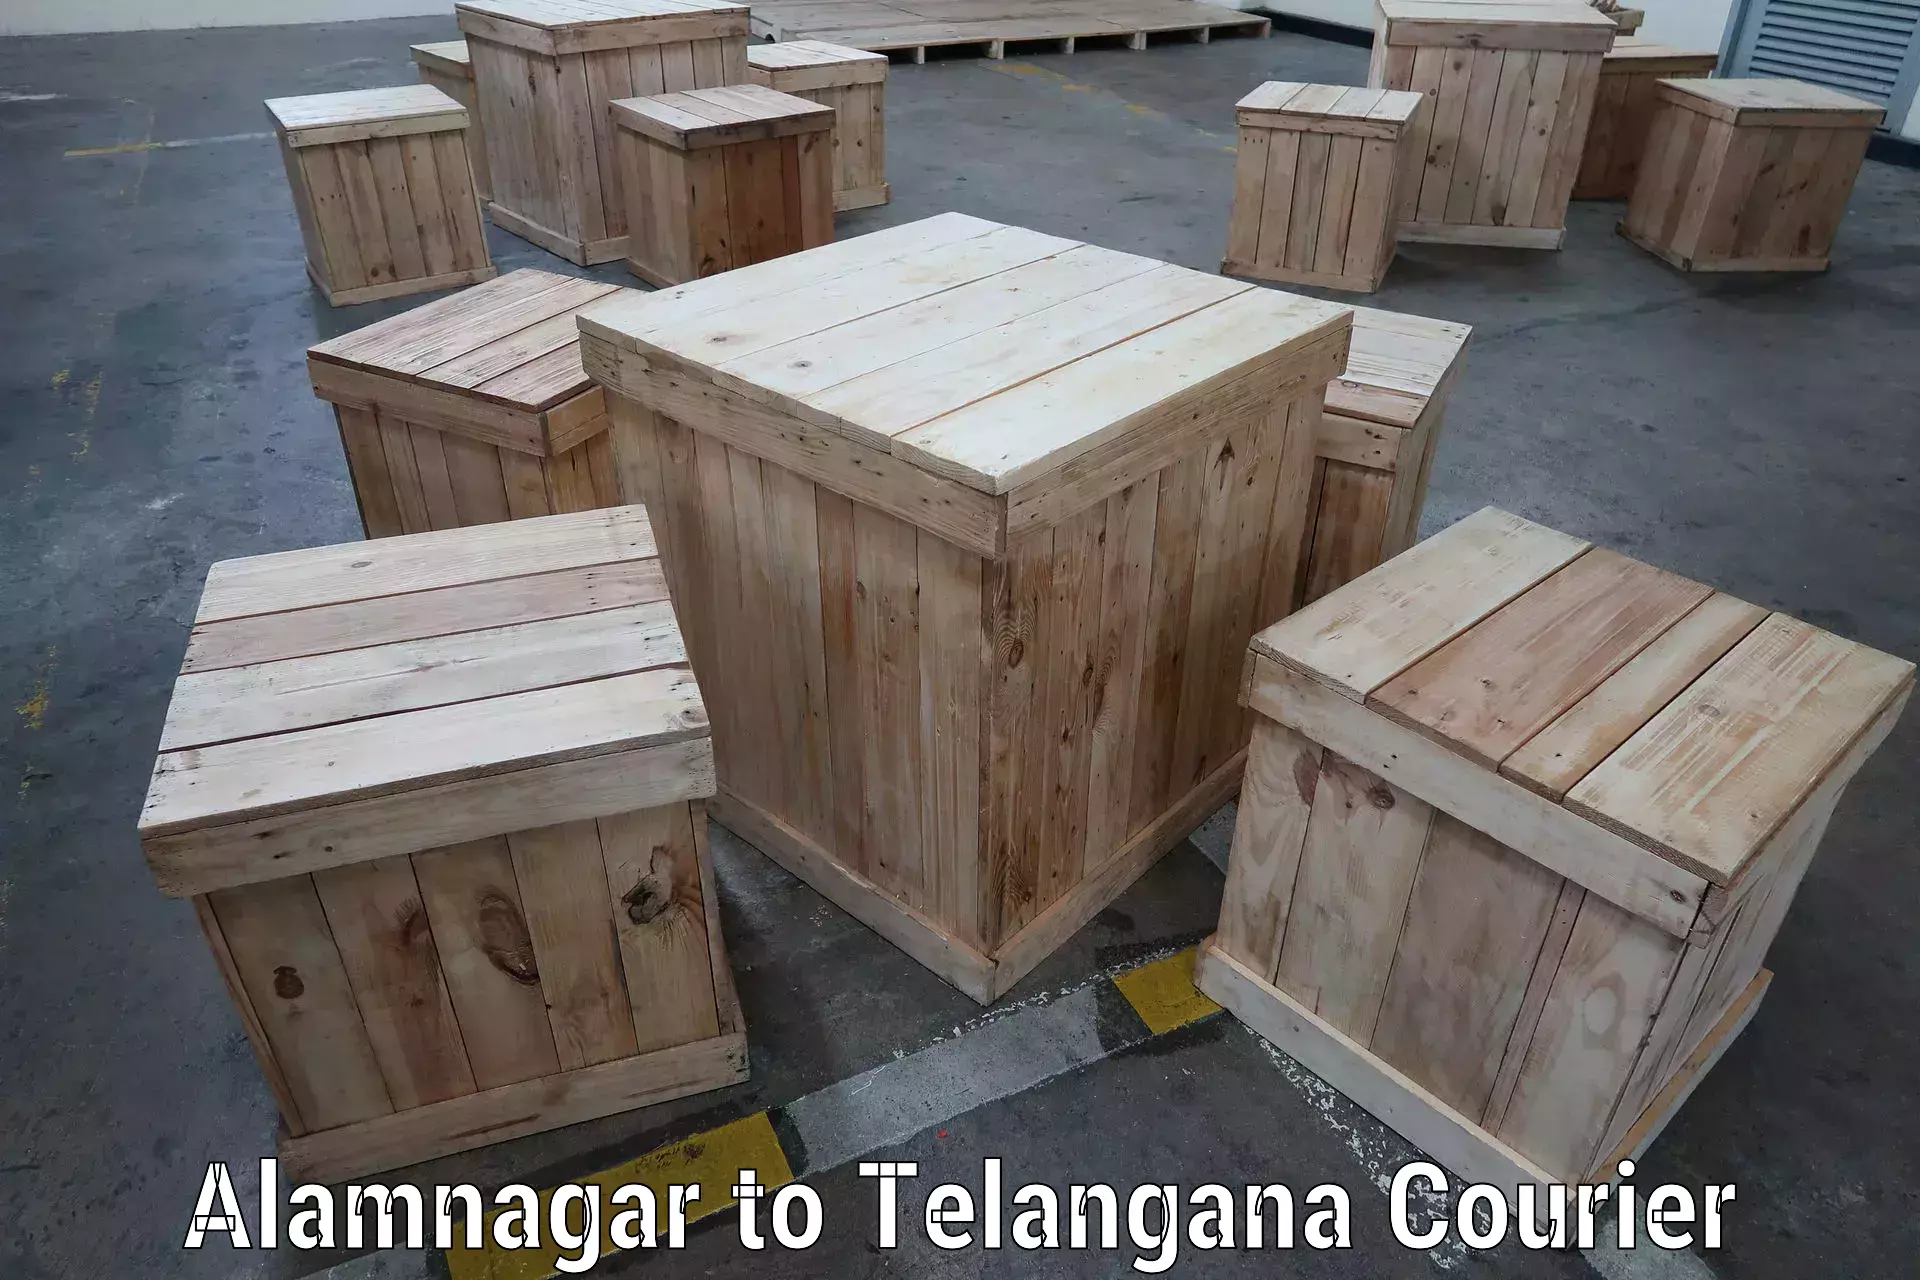 Pharmaceutical courier Alamnagar to Amangal